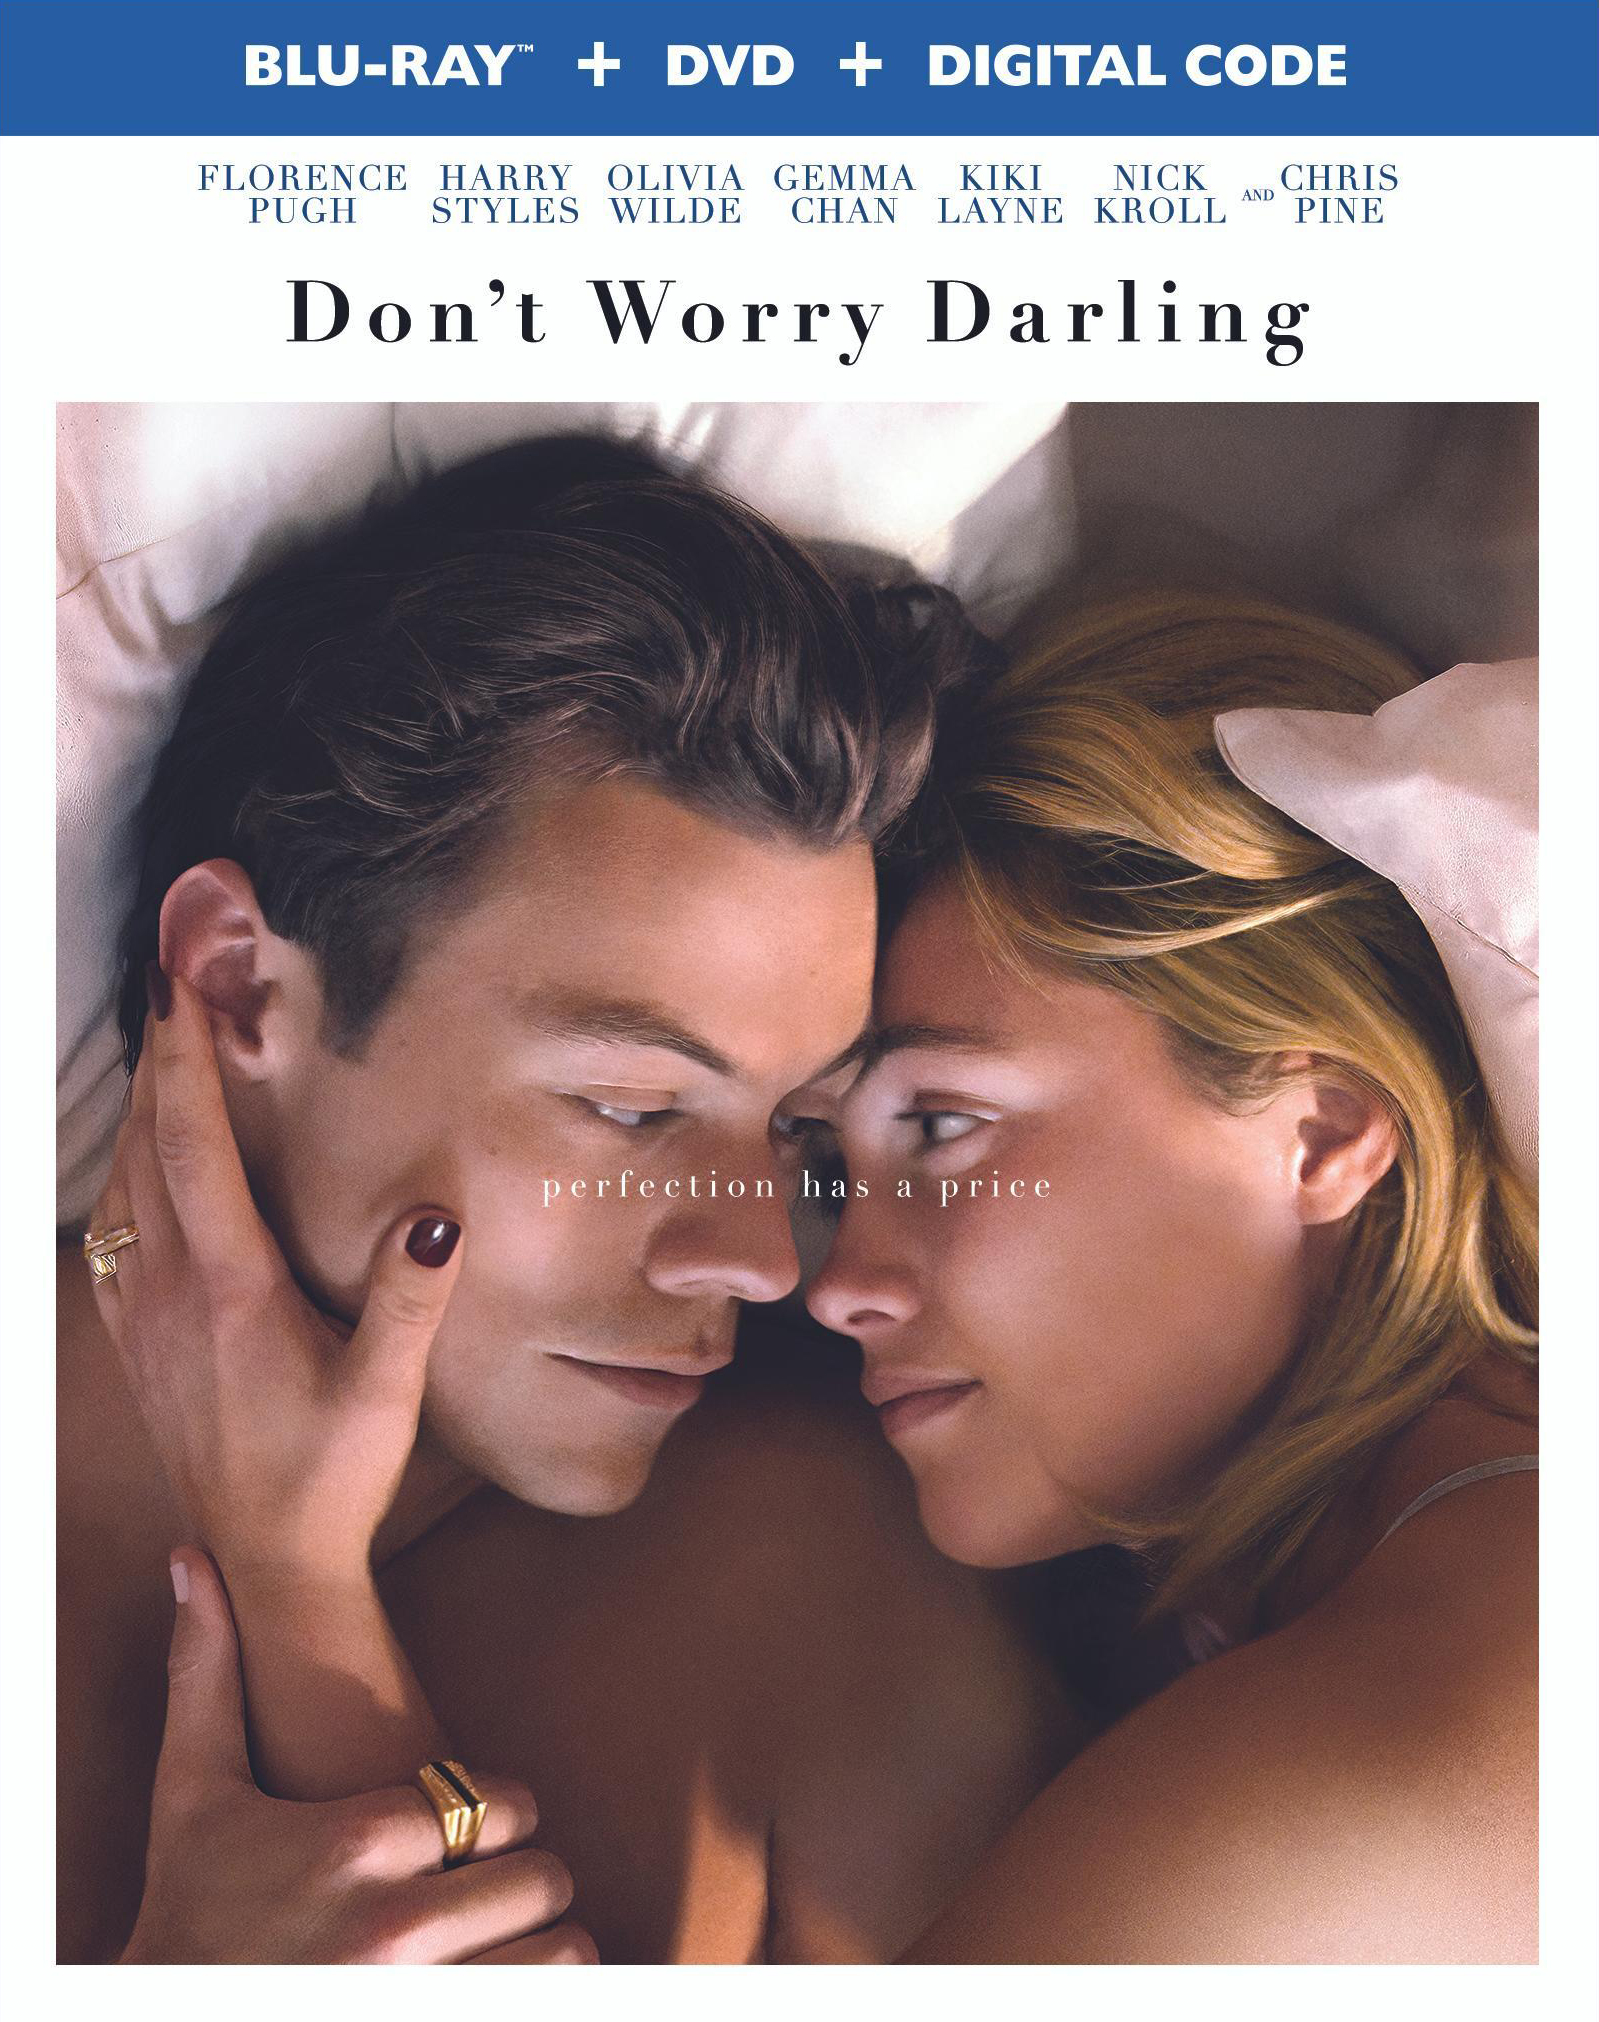 Don't Worry Darling [Includes Digital Copy] [Blu-ray/DVD] [2022] - Best Buy